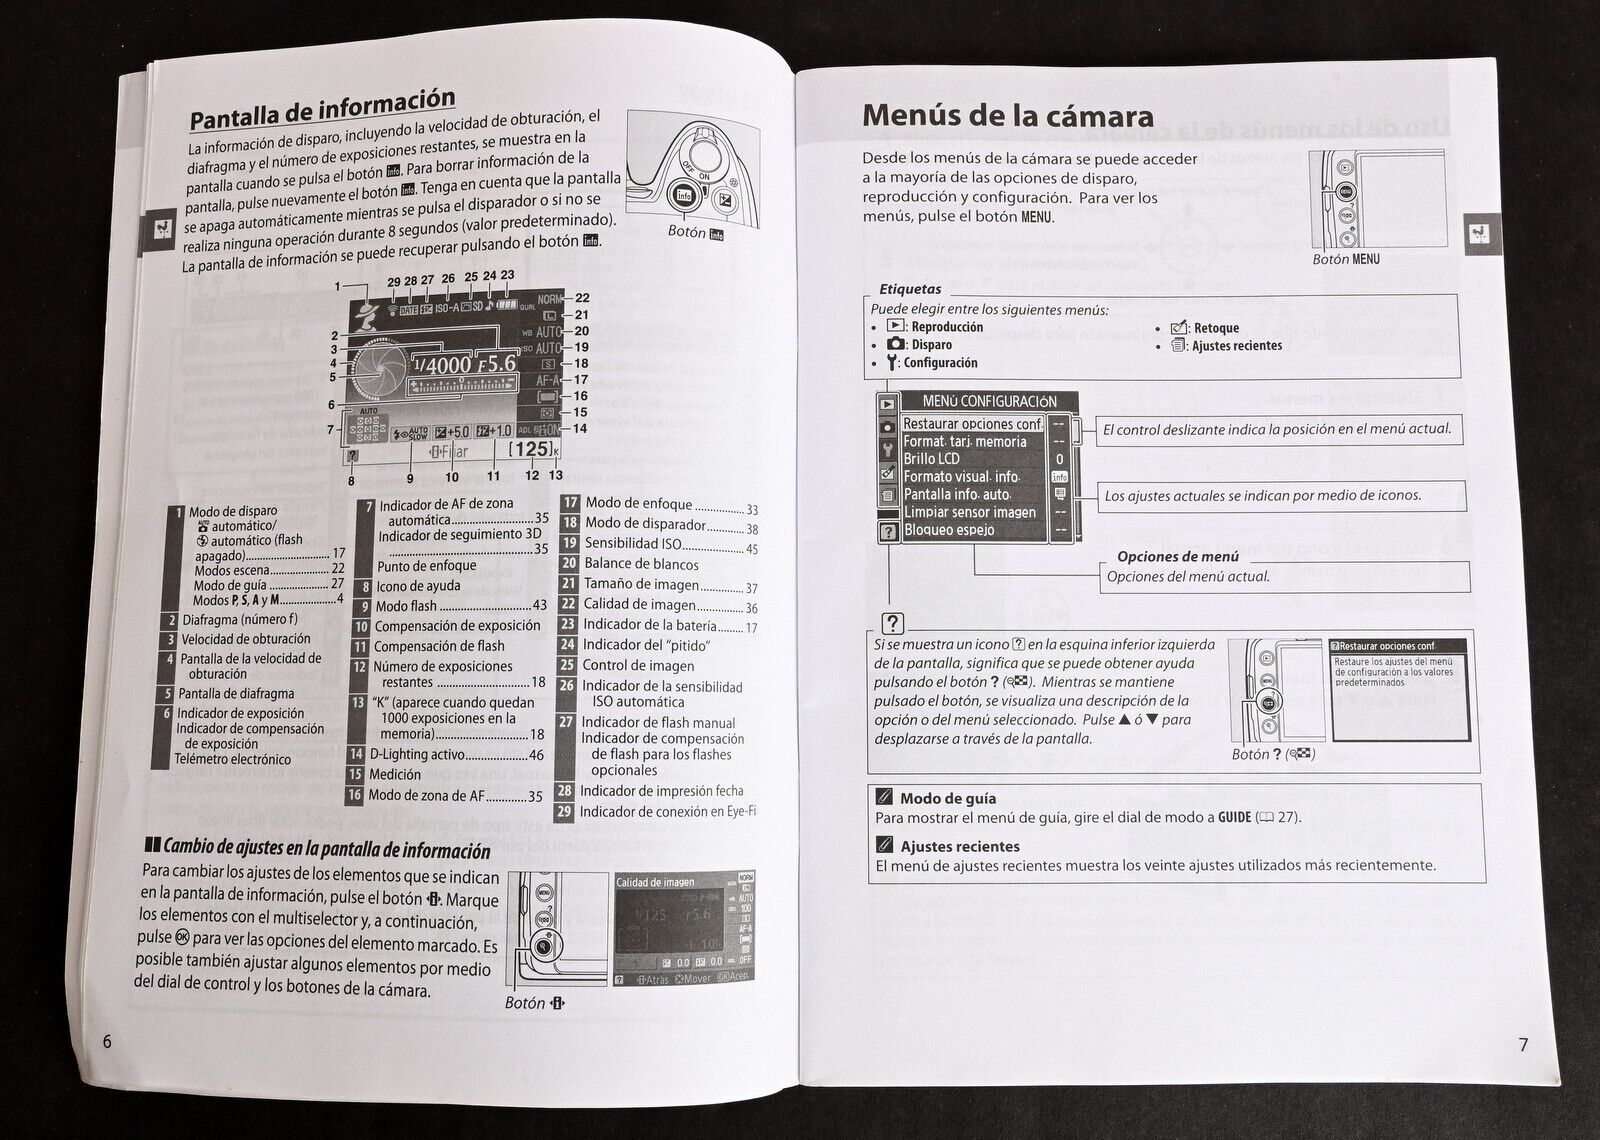 Original Nikon D3000 Comprehensive User Manual (ES) 2009 Edition - Excellent